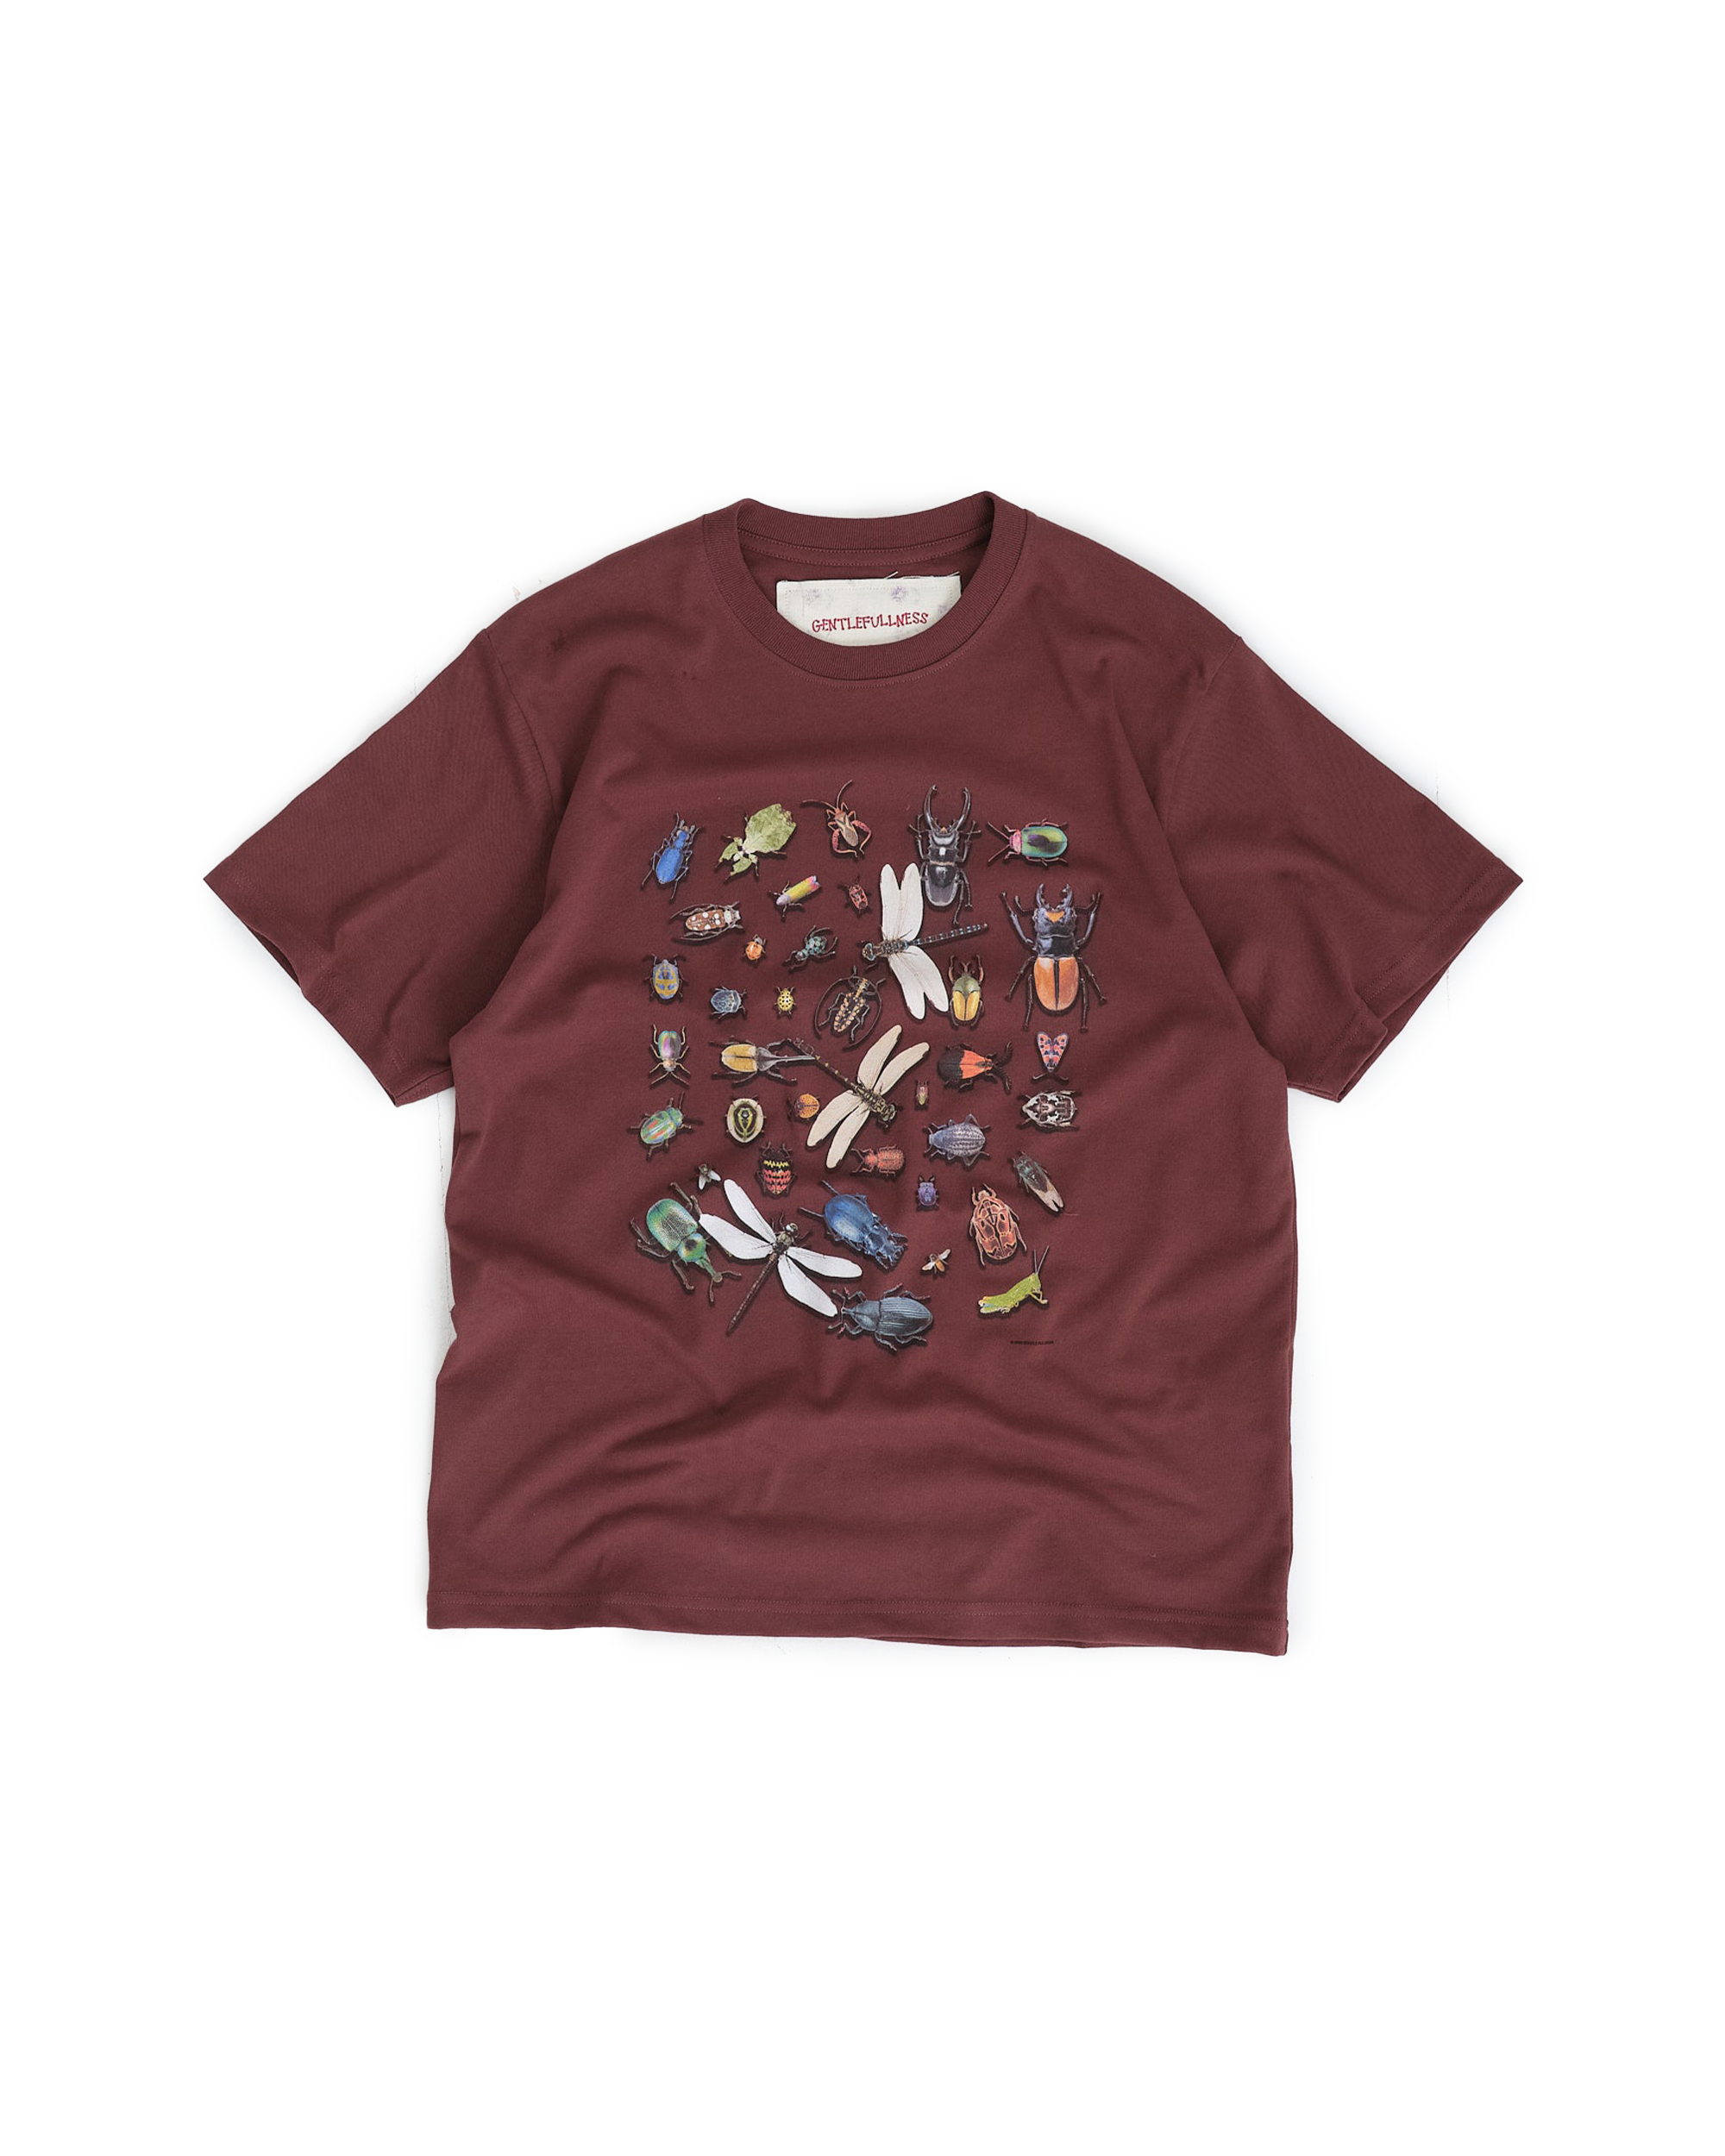 Bugs SS T-shirt - Chocolate